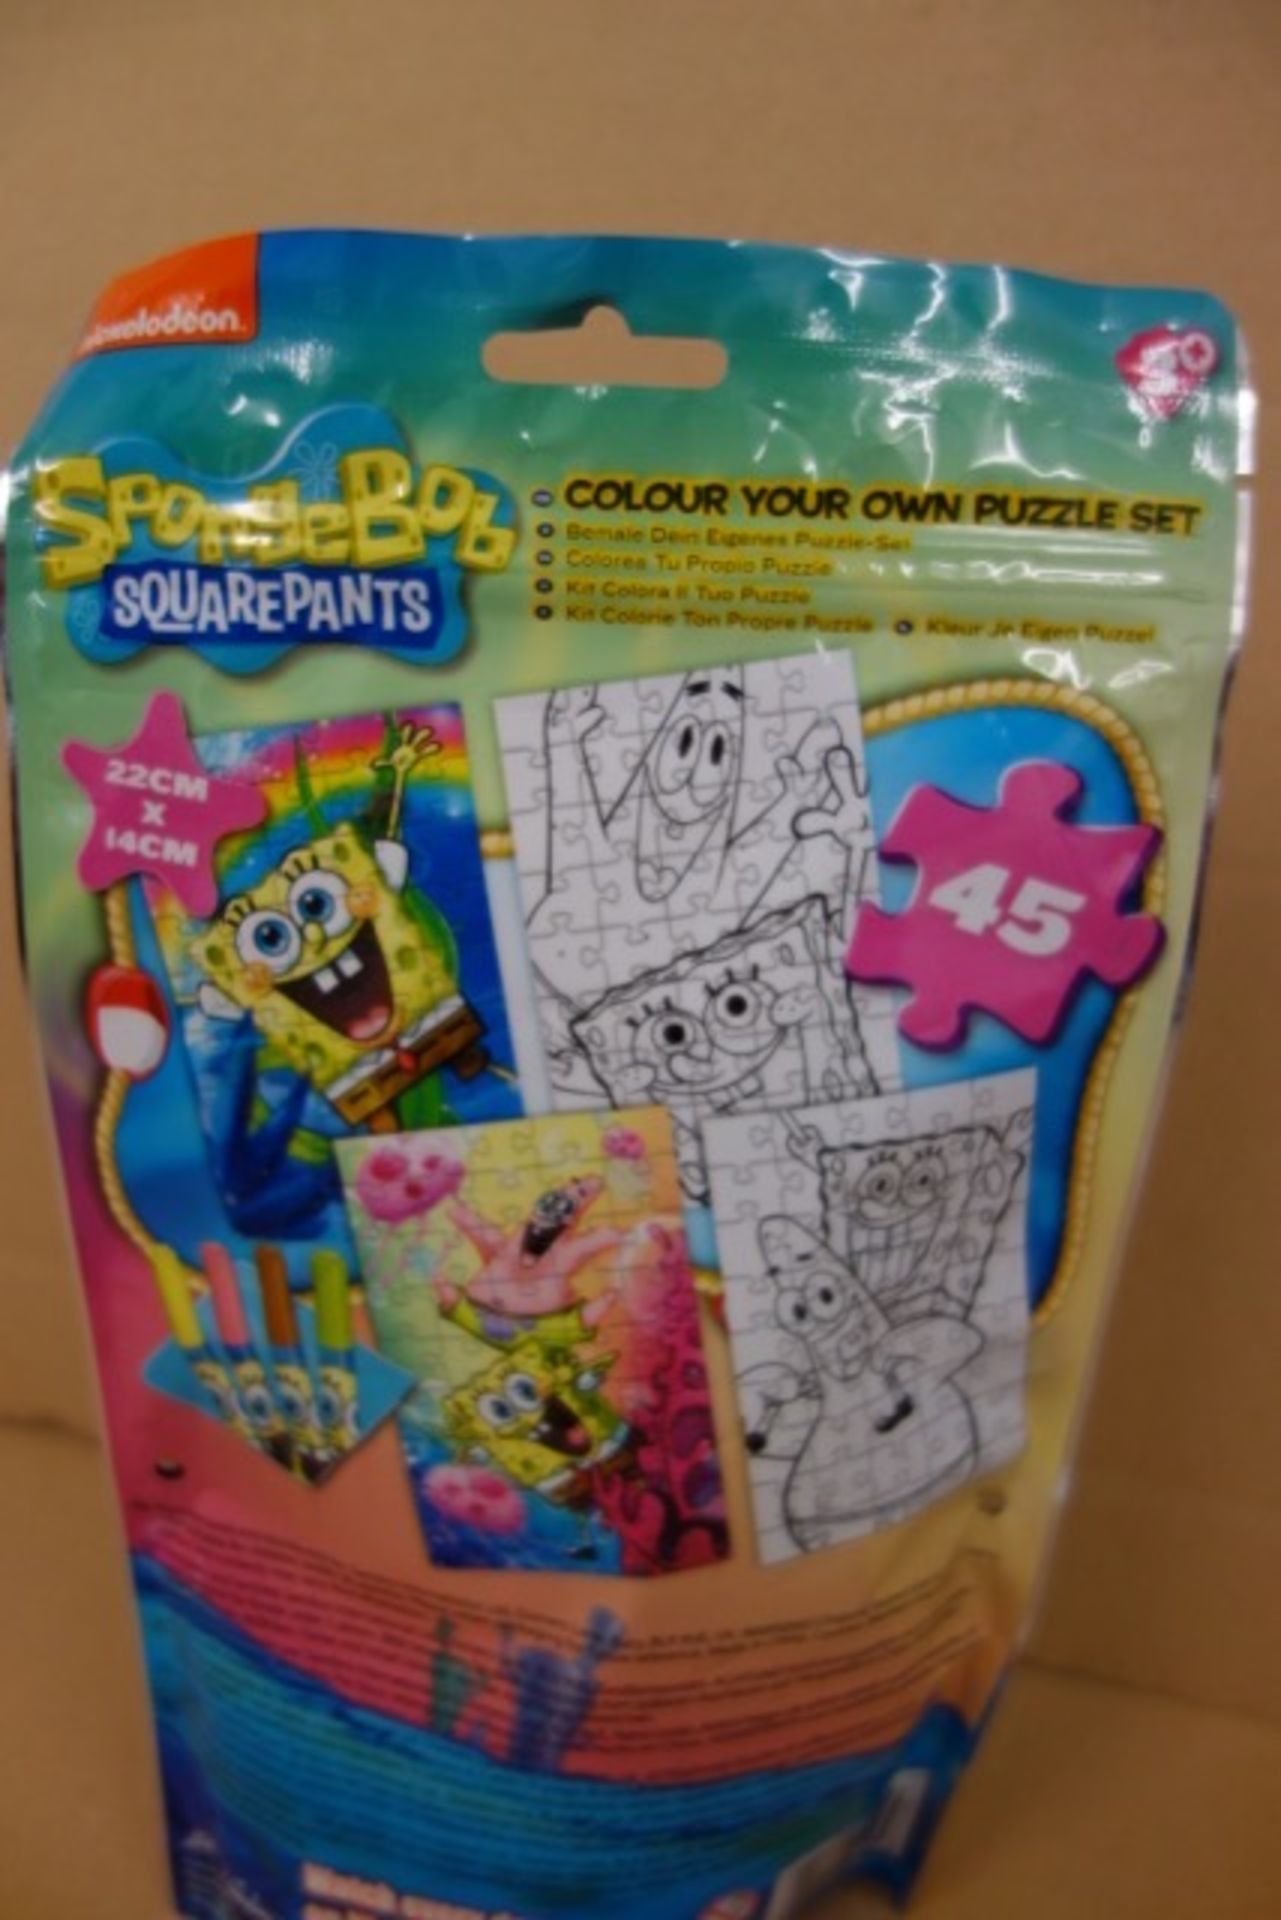 72 x Brand New Spongebob Squarepants Colour Your Own Puzzle Set. Includes Resealable Bag & 4 Makers. - Image 2 of 2